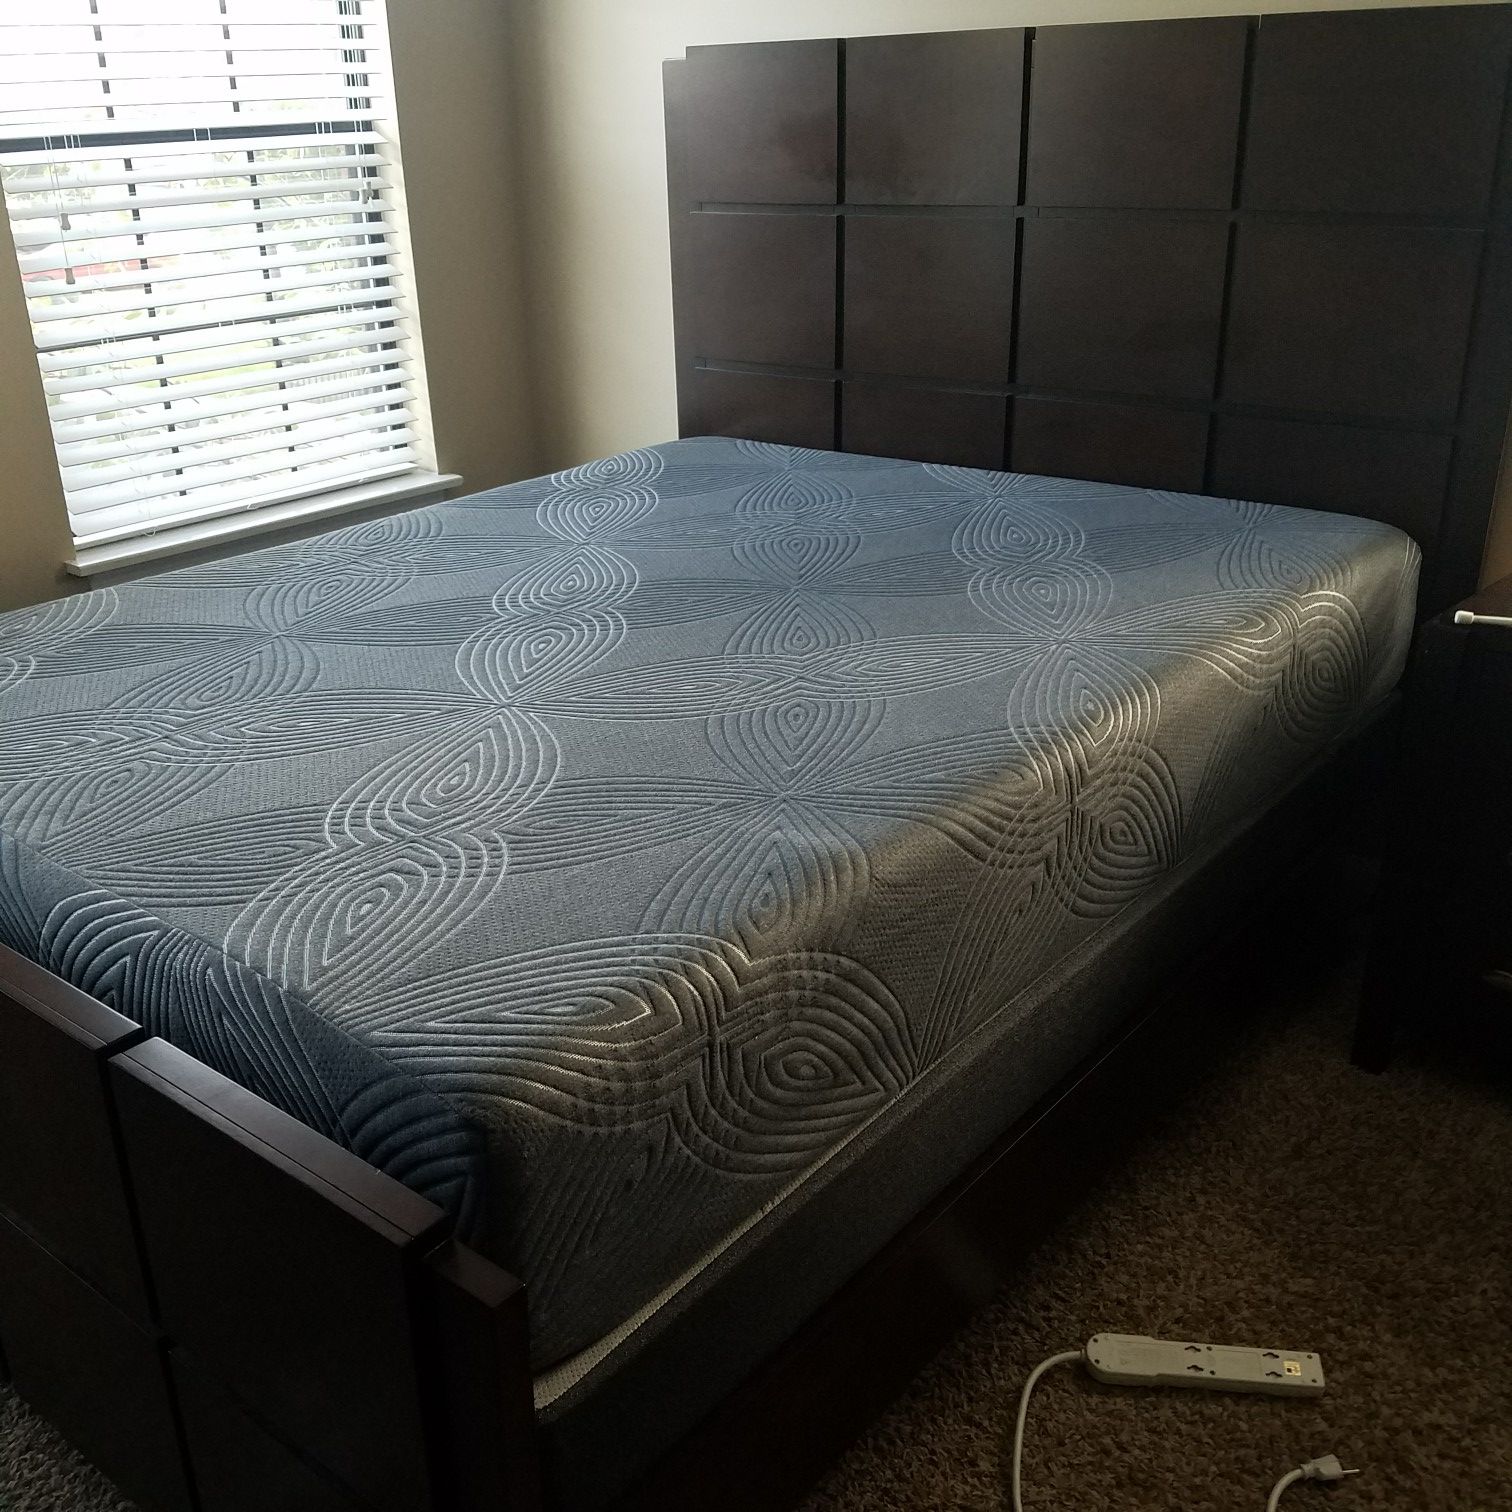 American air mattress with a 10 year warranty